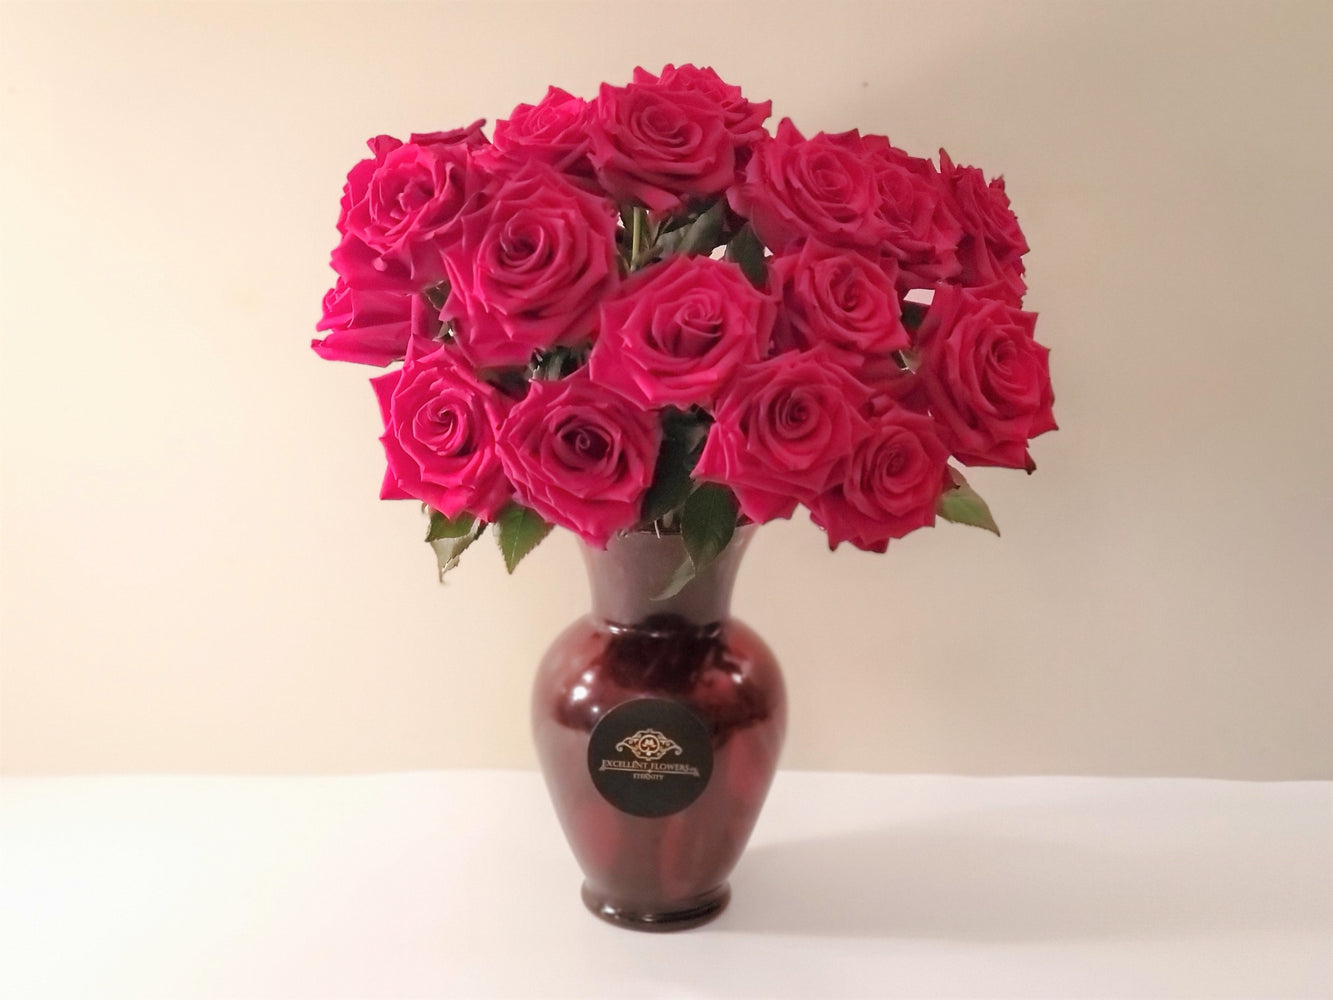 Rose Love  Arrangement with Vase I FREE SHIPPING